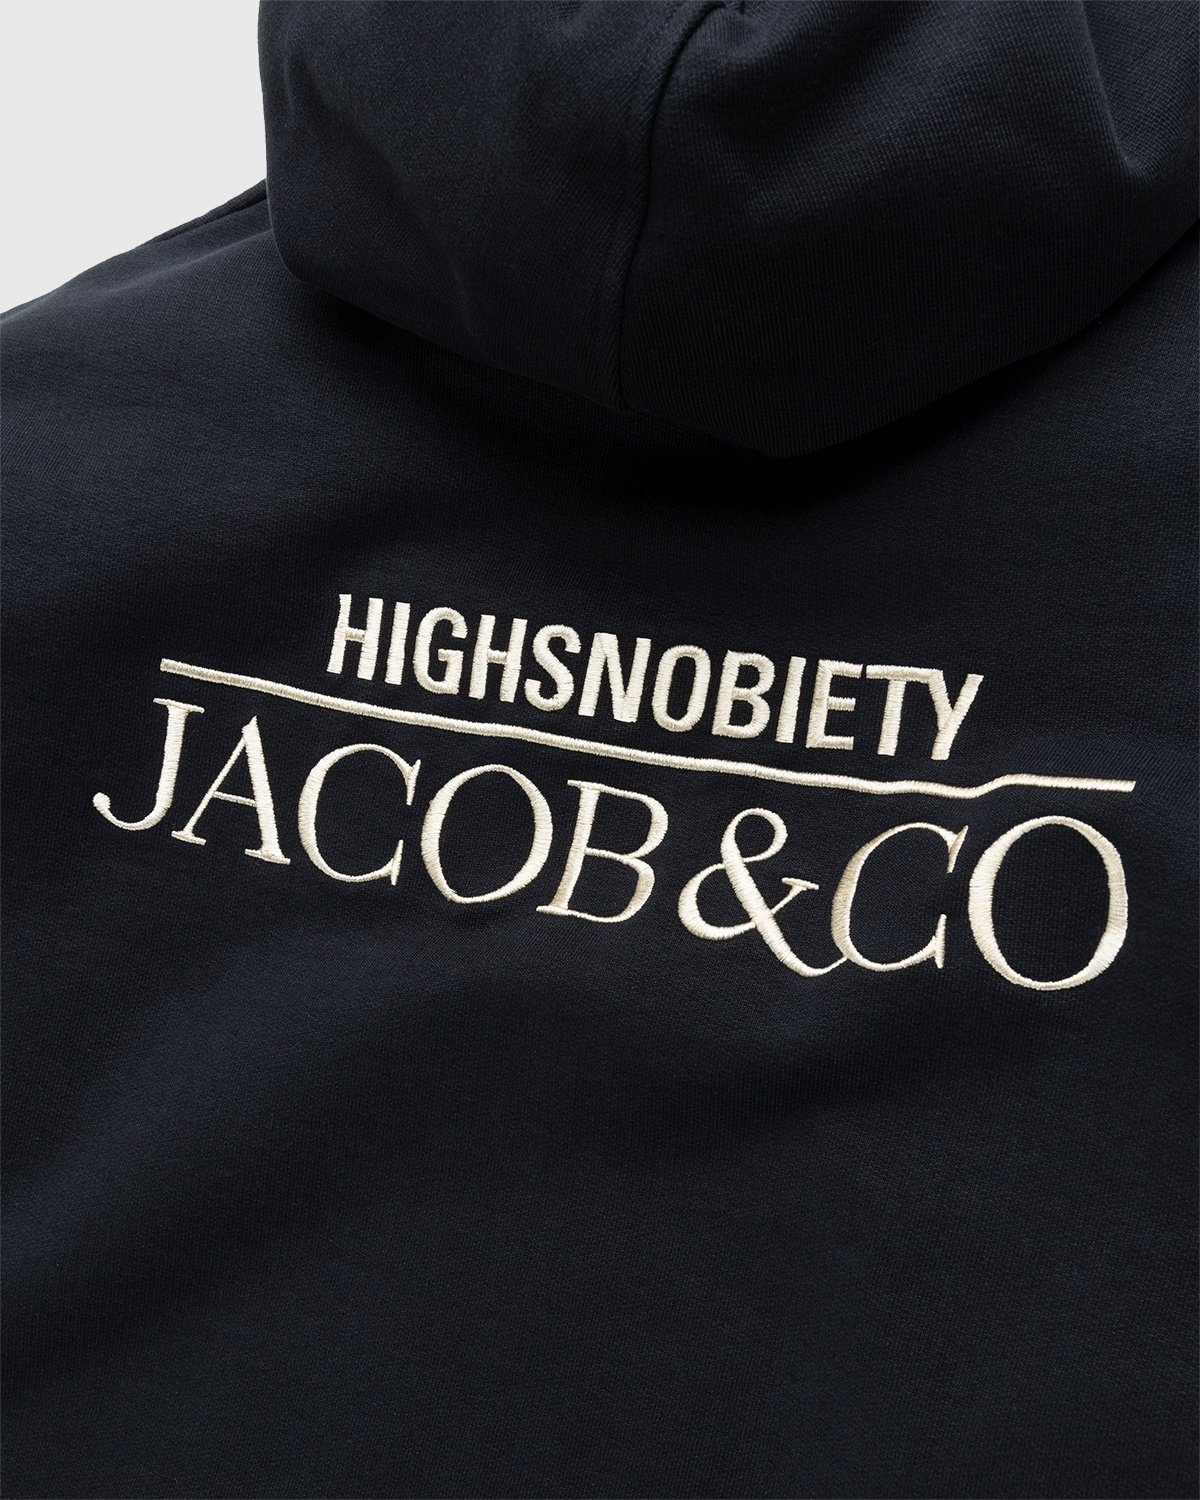 Jacob & Co. x Highsnobiety – Logo Fleece Hoodie Black - Sweats - Black - Image 3